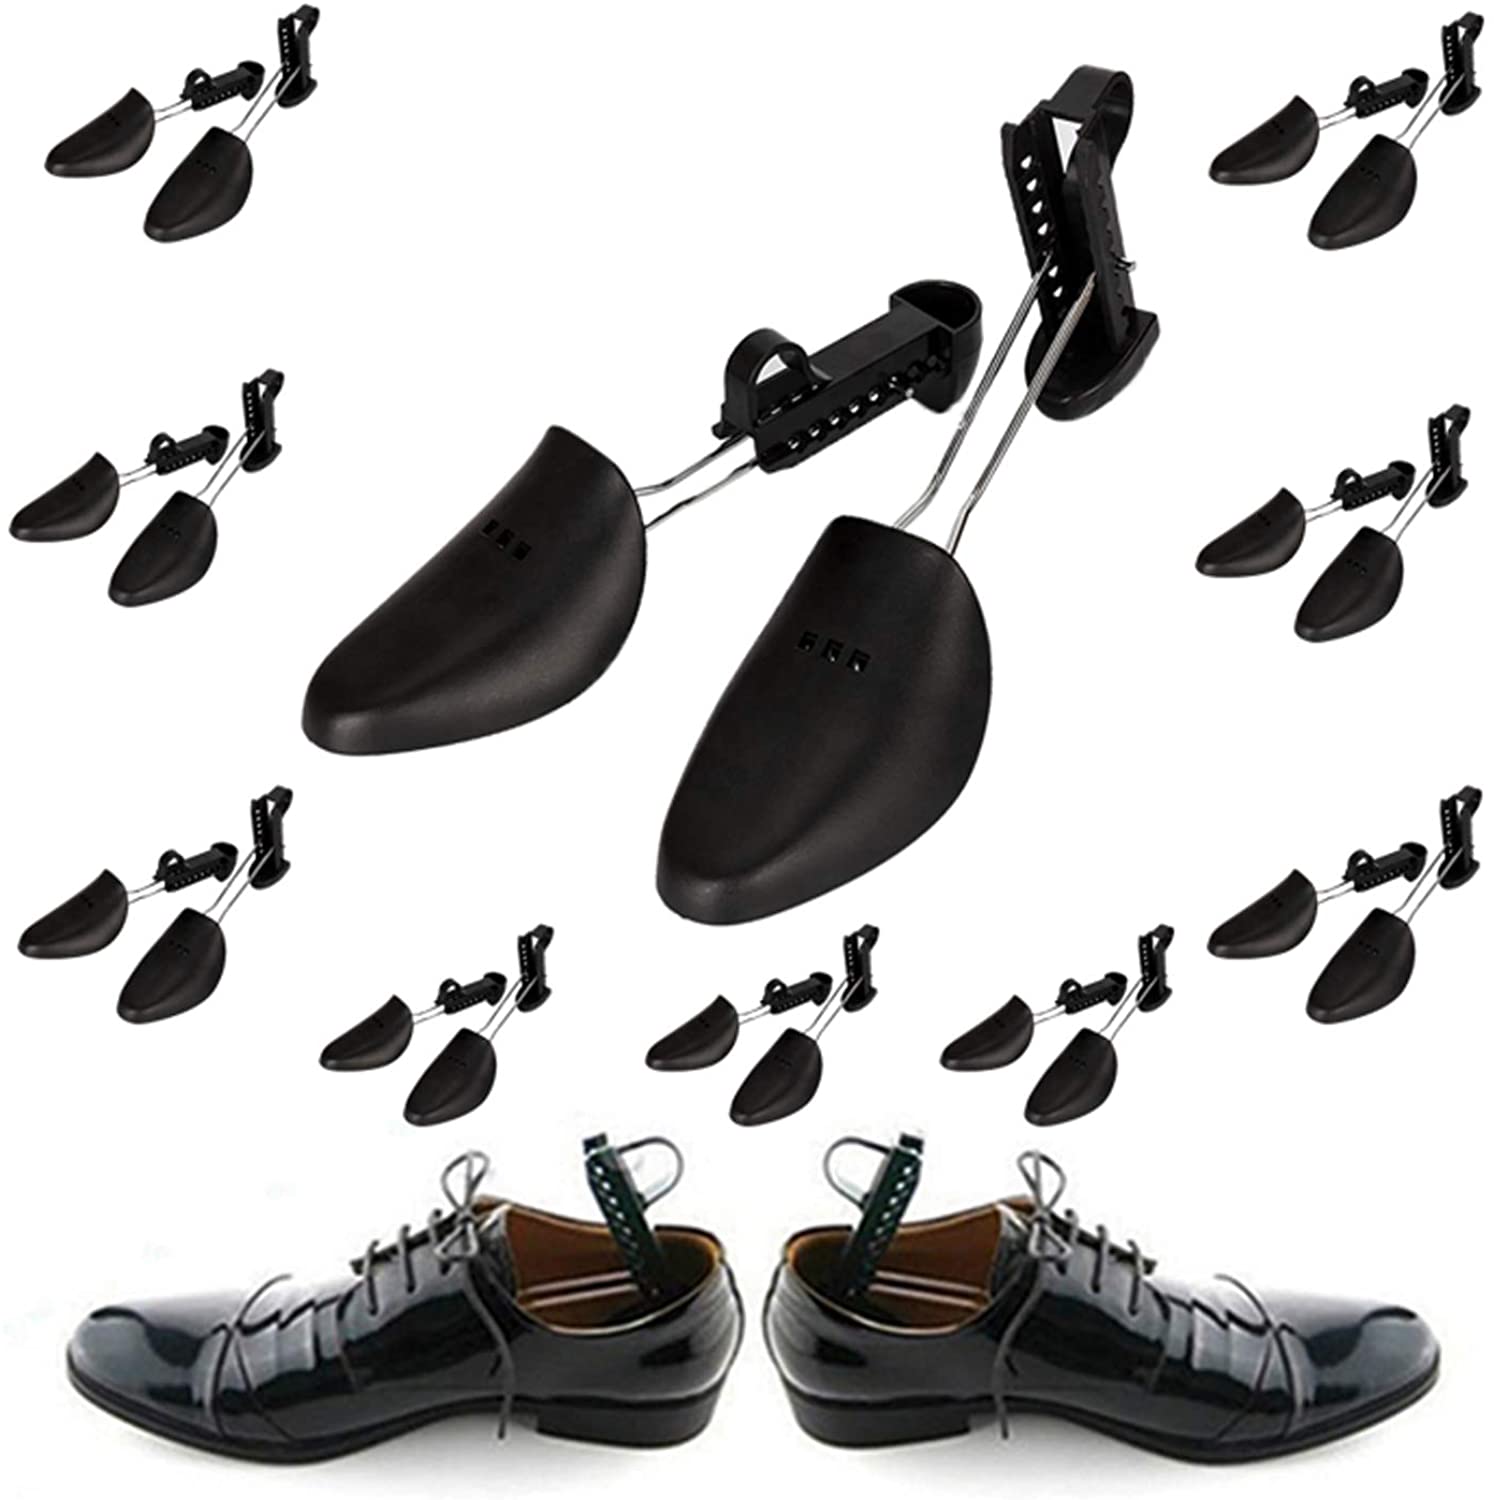 Coresto Shoe Stretcher Plastic Shoe Tree Pair of Shoe Stretchers Expander for Women and Men 